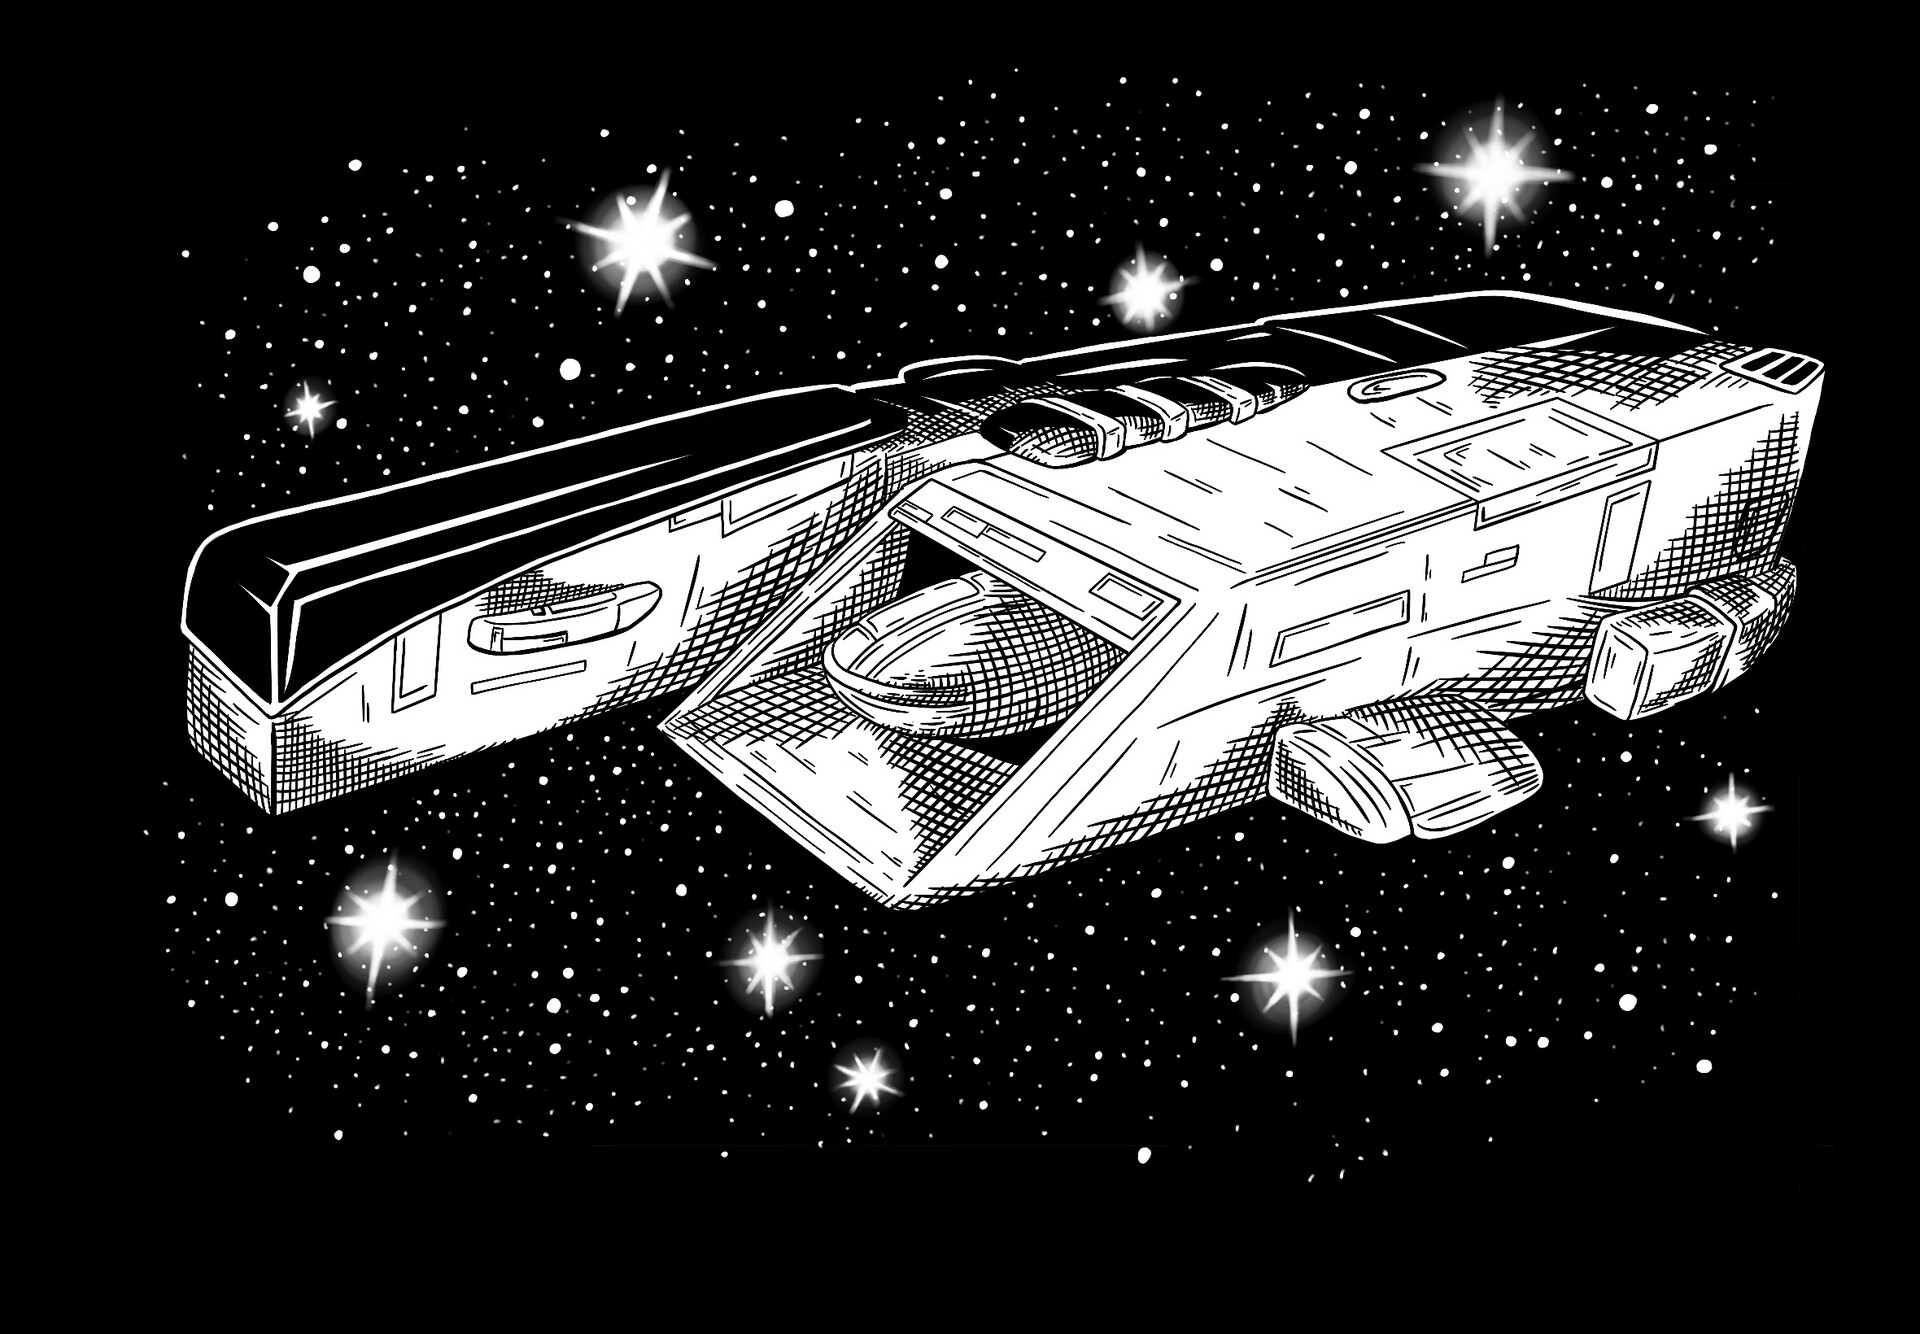 ArtStation - Space ship comic ink art